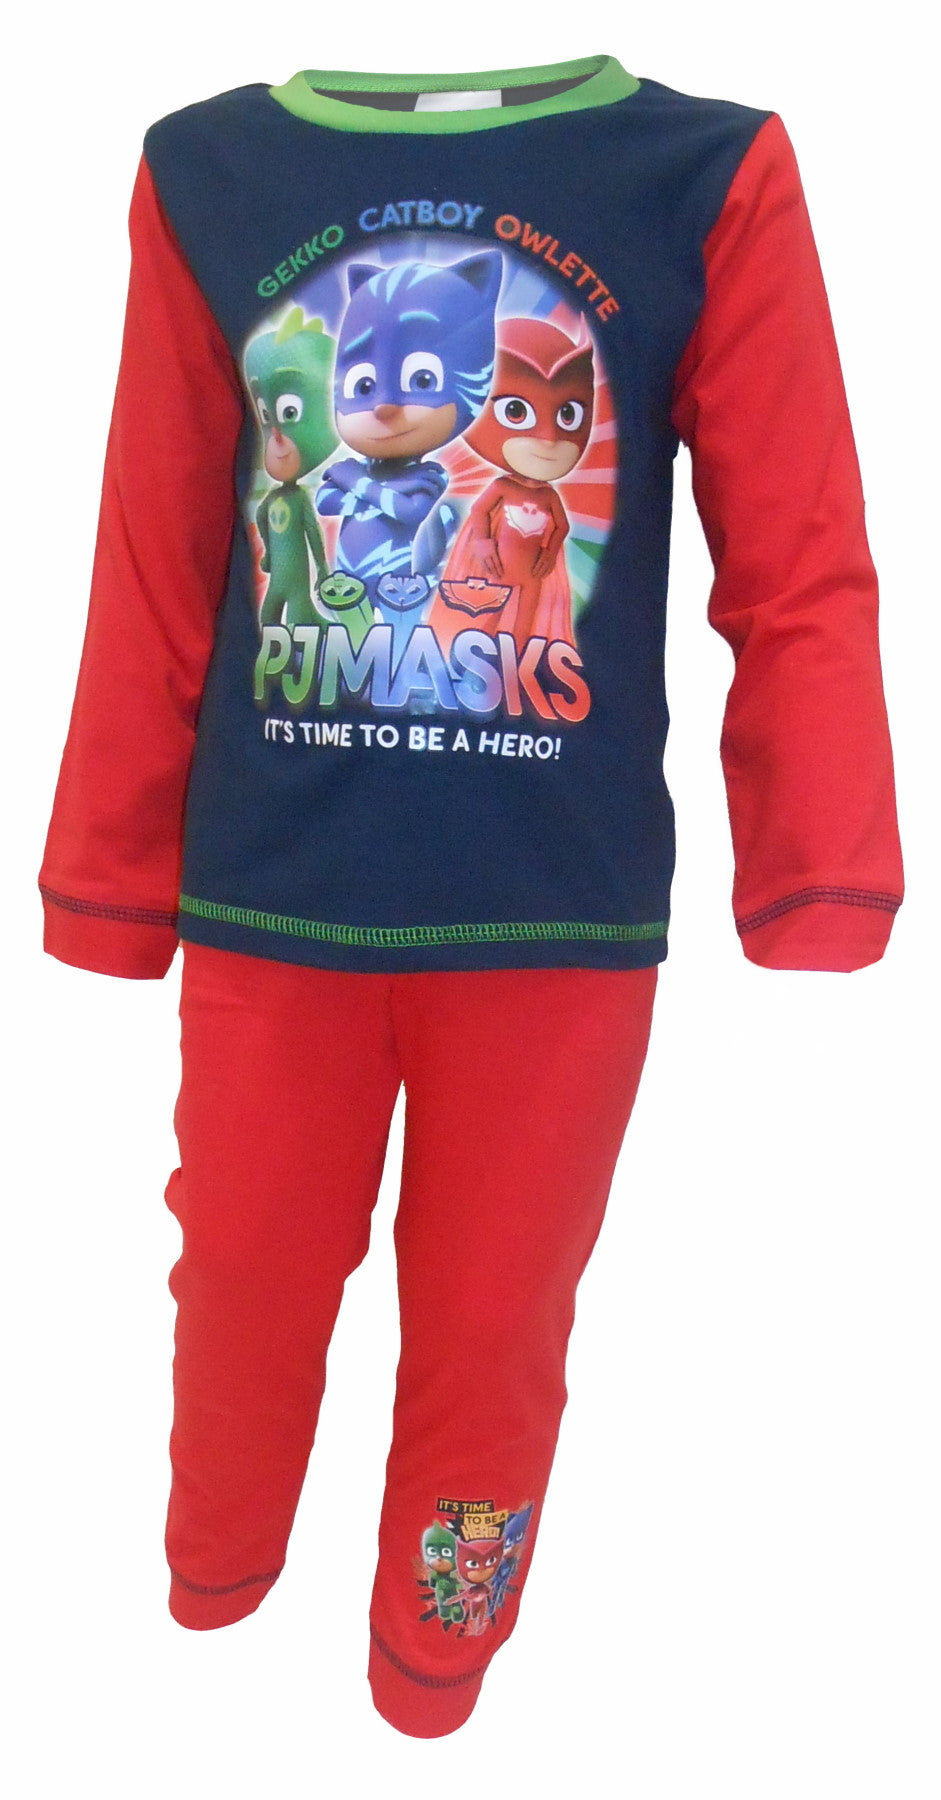 PJ Masks "Hero" Boys Pyjamas 18-24 Months